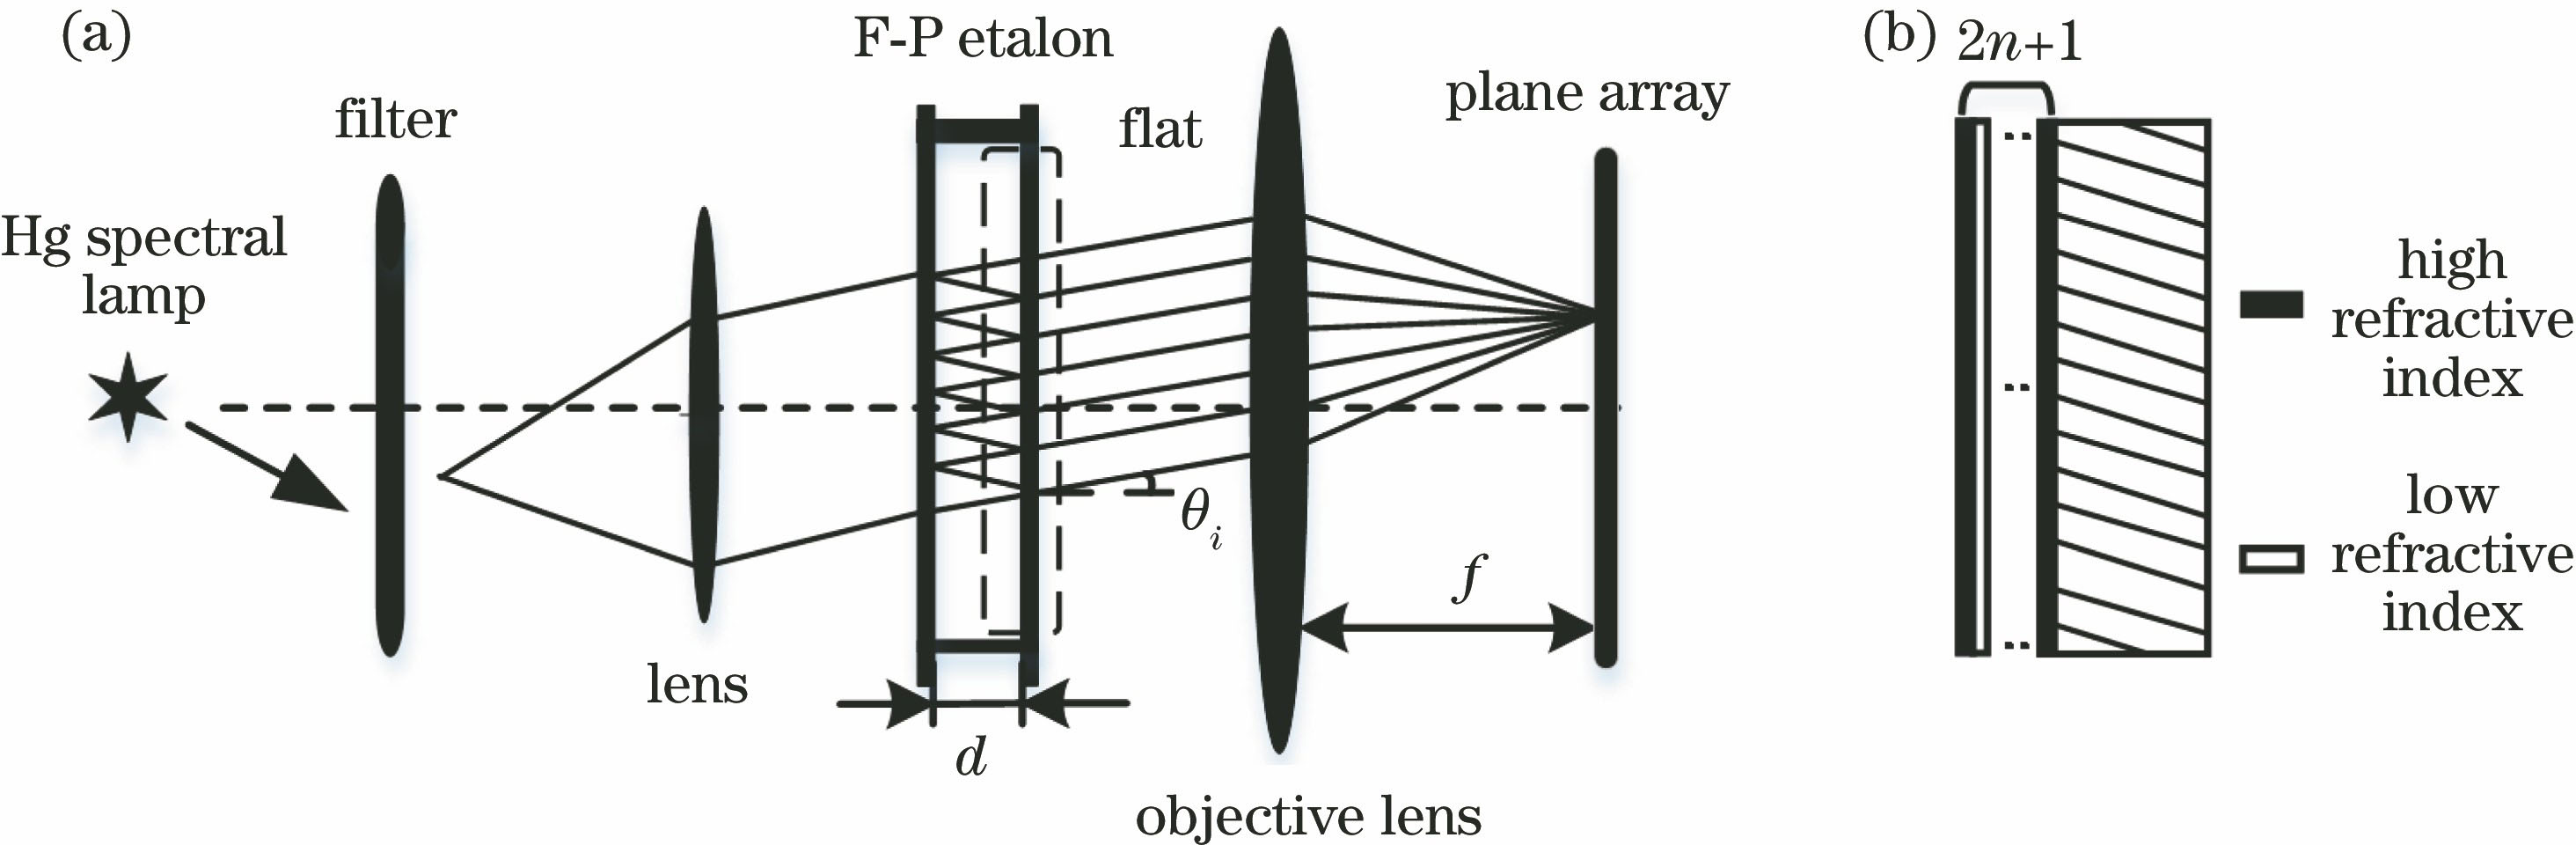 Interference schematic. (a) F-P etalon interference imaging schematic; (b) flat panel enlargement